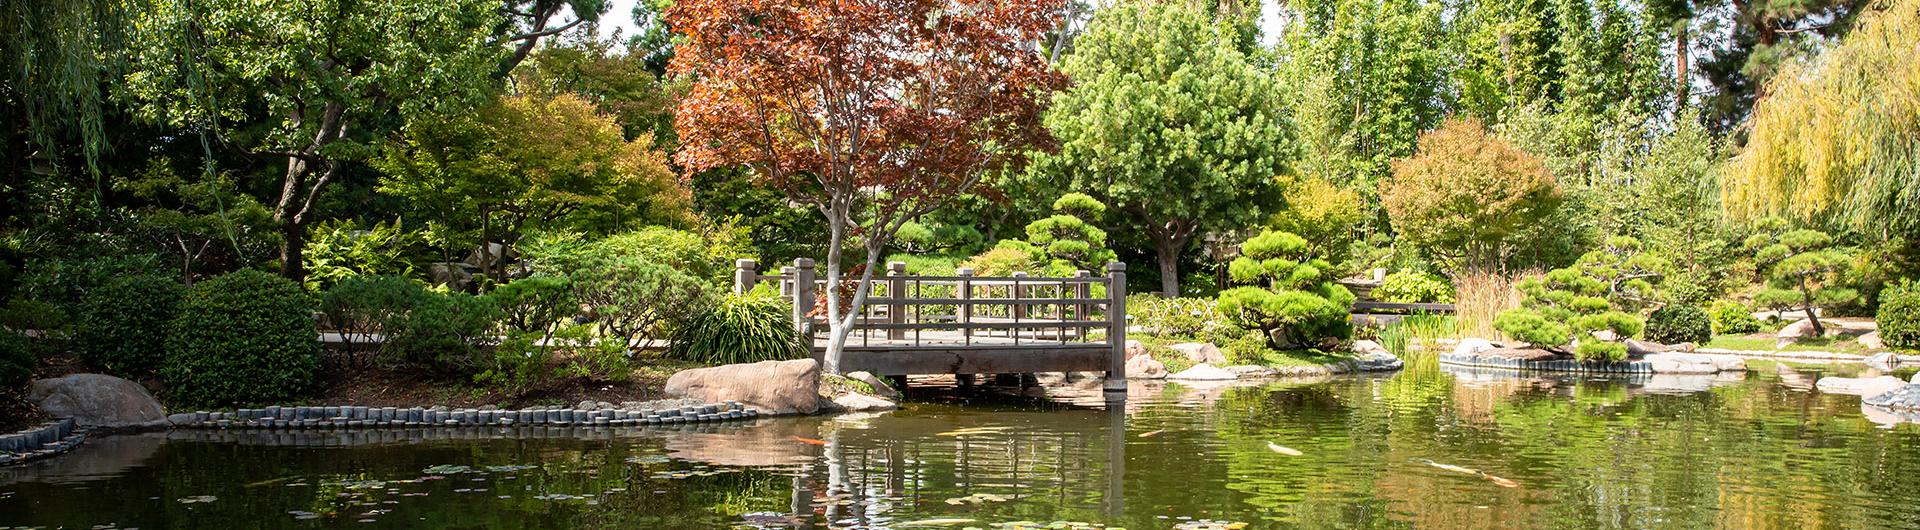 Photo of Japanese Garden pond and bridge